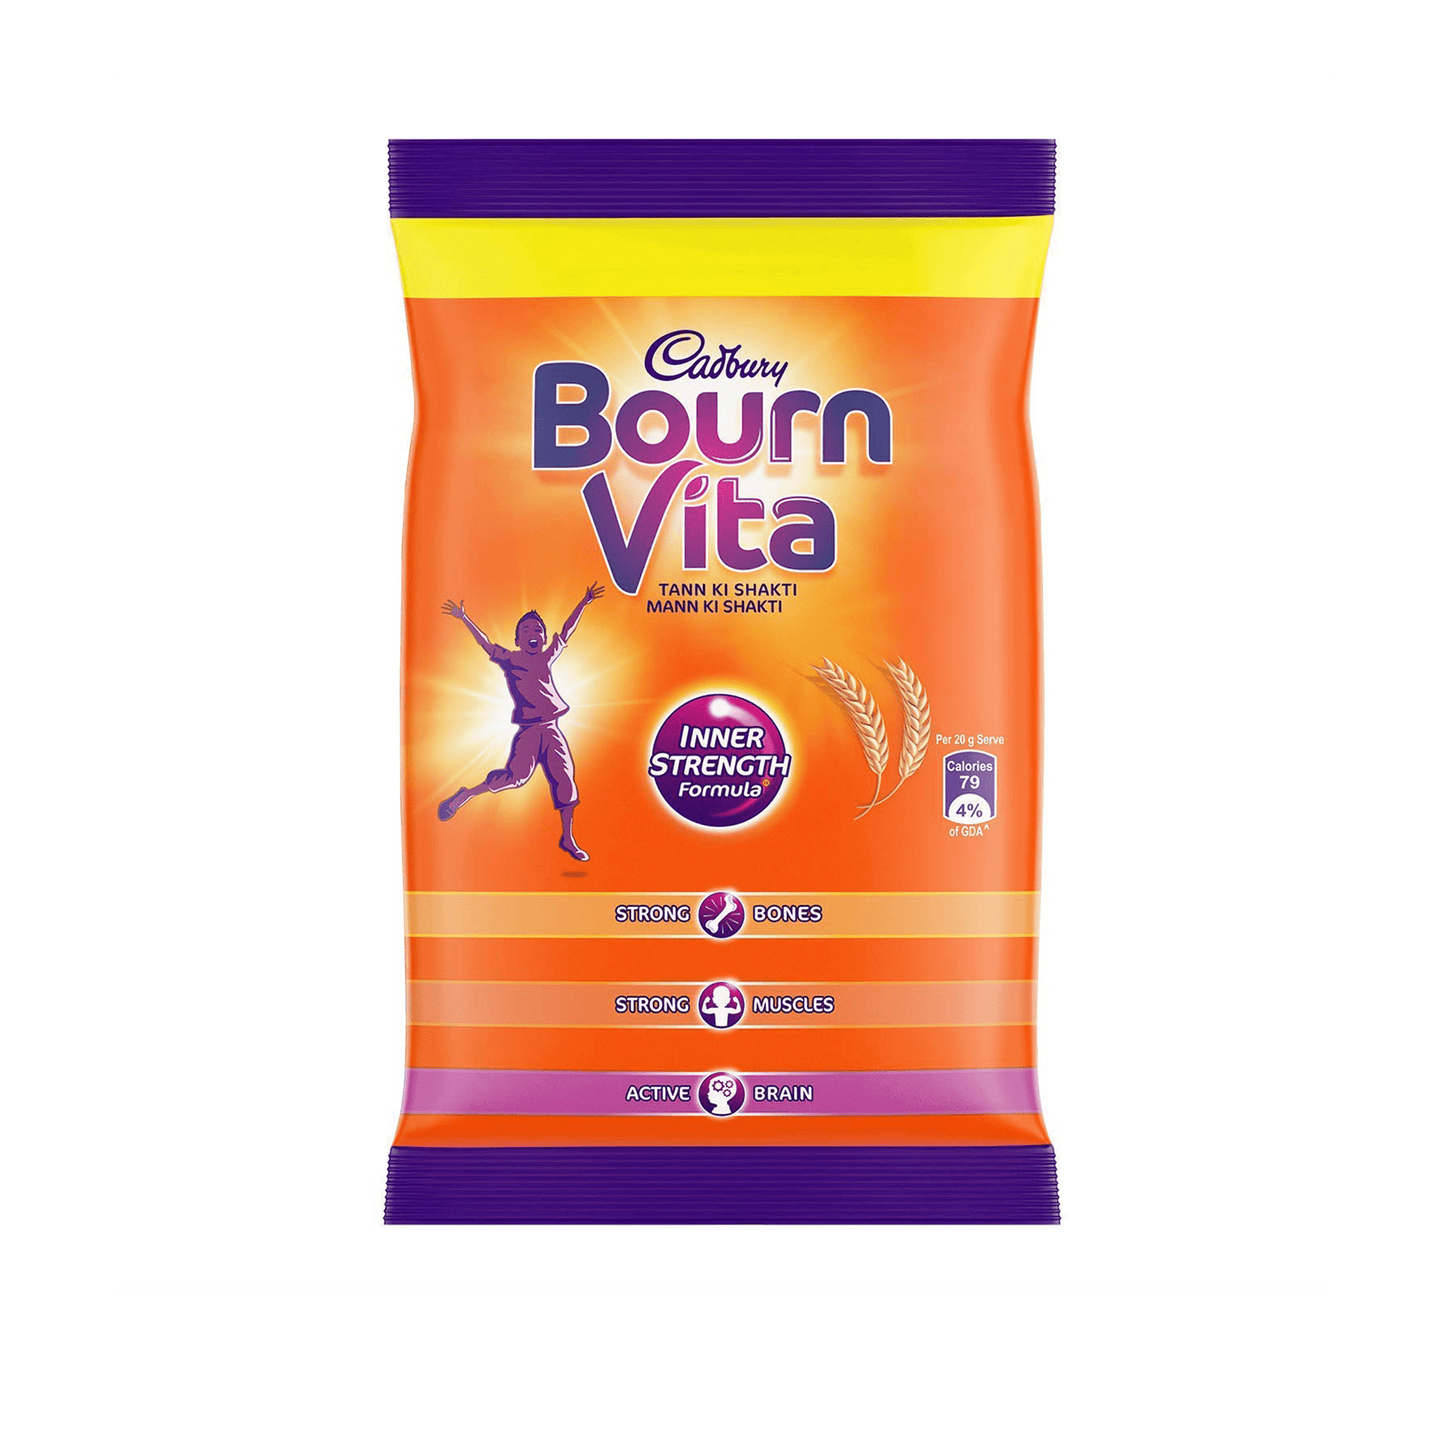 Cadbury Bournvita - Chocolate Health Drink Pouch.